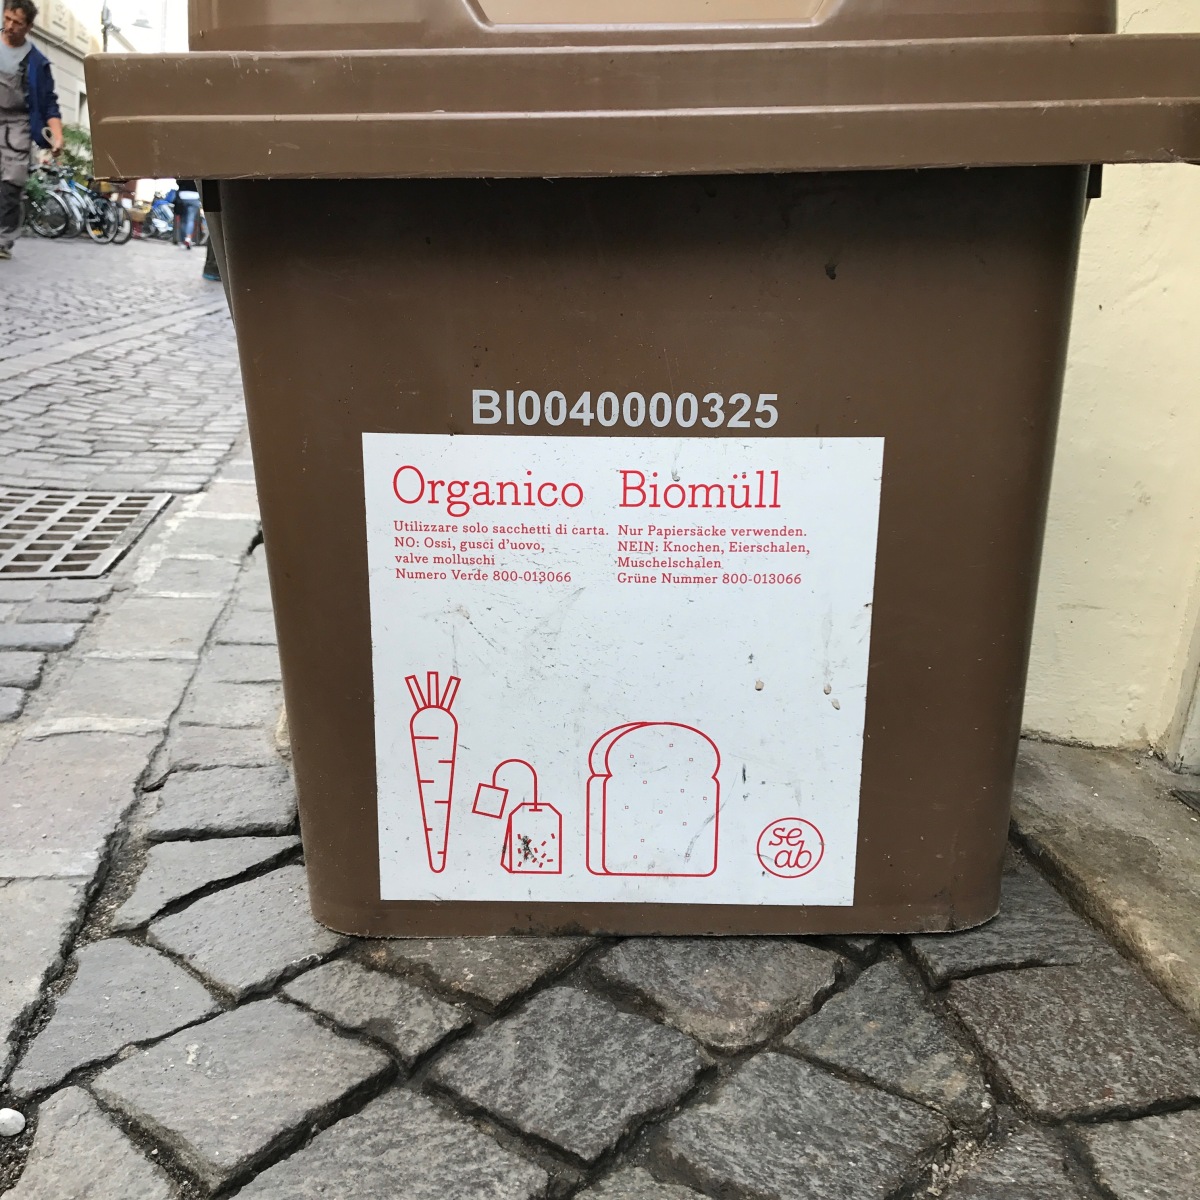 Organic recycling in Europe